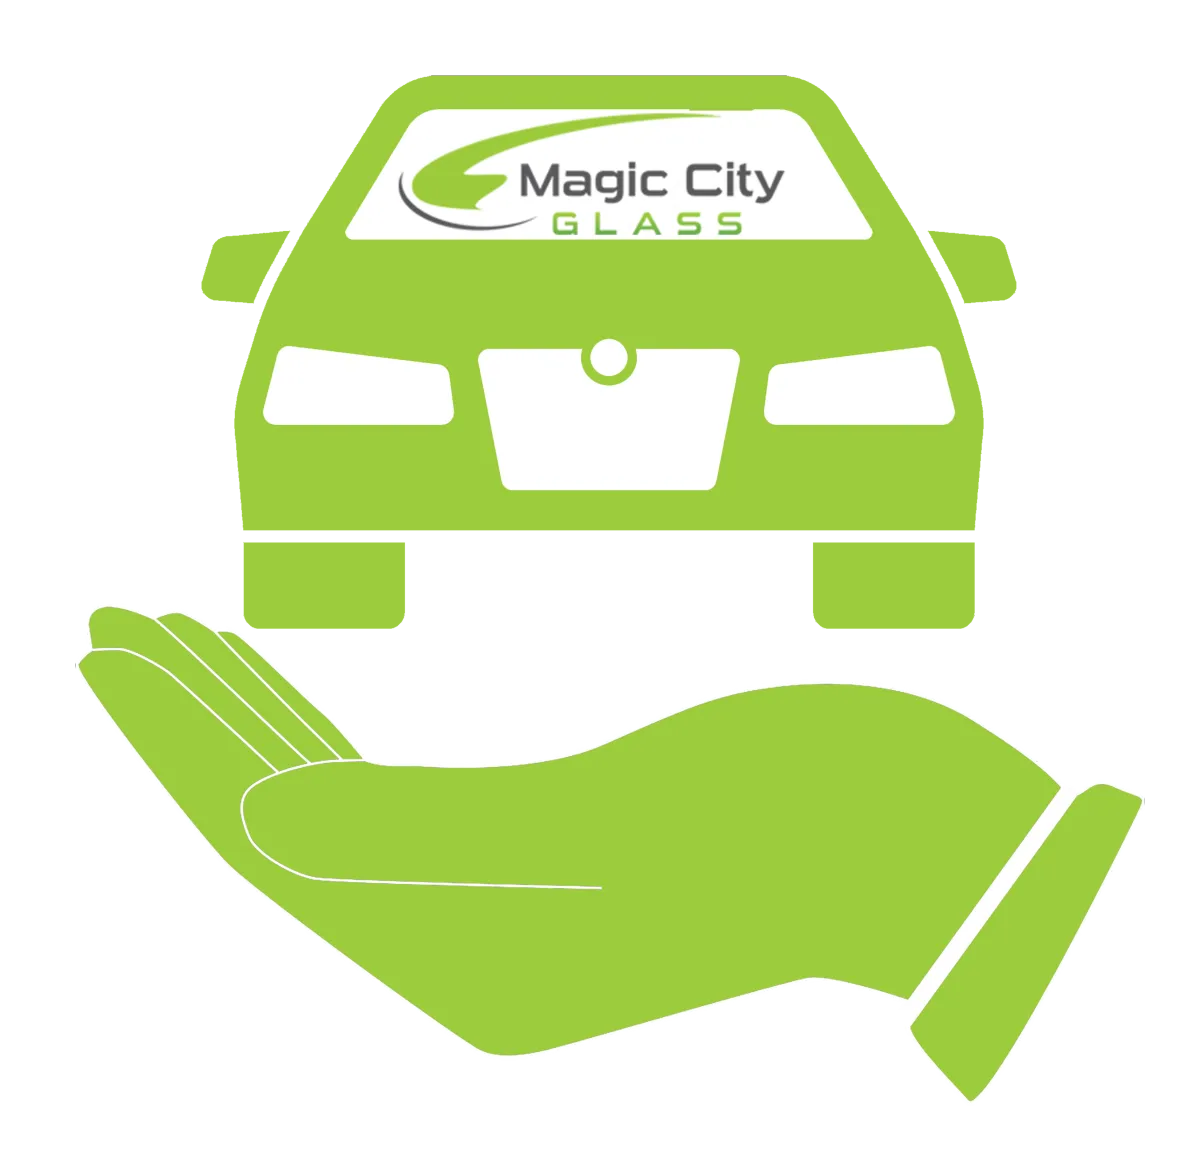 Magic City Auto Glass Repair and replacements - Birmingham Alabama